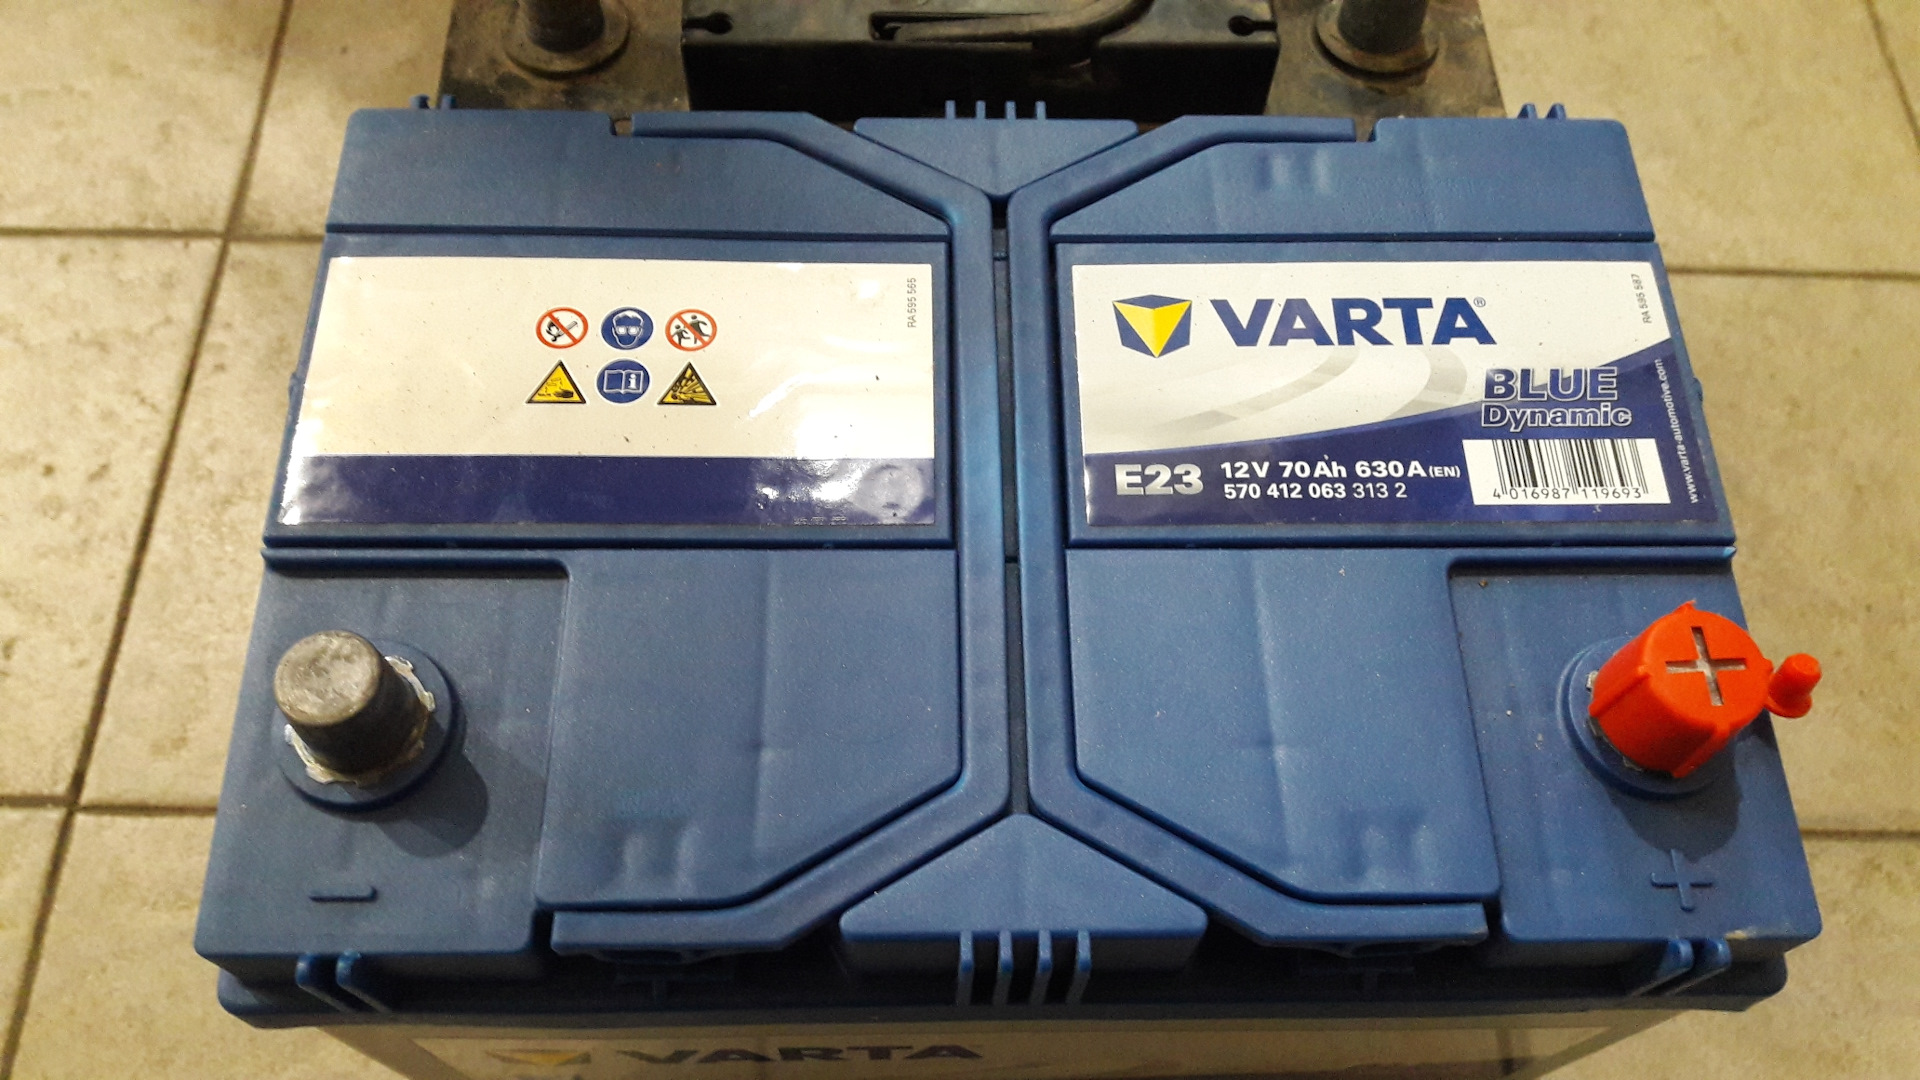 Аккумулятор е. Varta Blue Dynamic e23. Аккумулятор Varta 70ah. АКБ варта e23 70ah. Аккумулятор варта Блю динамик.